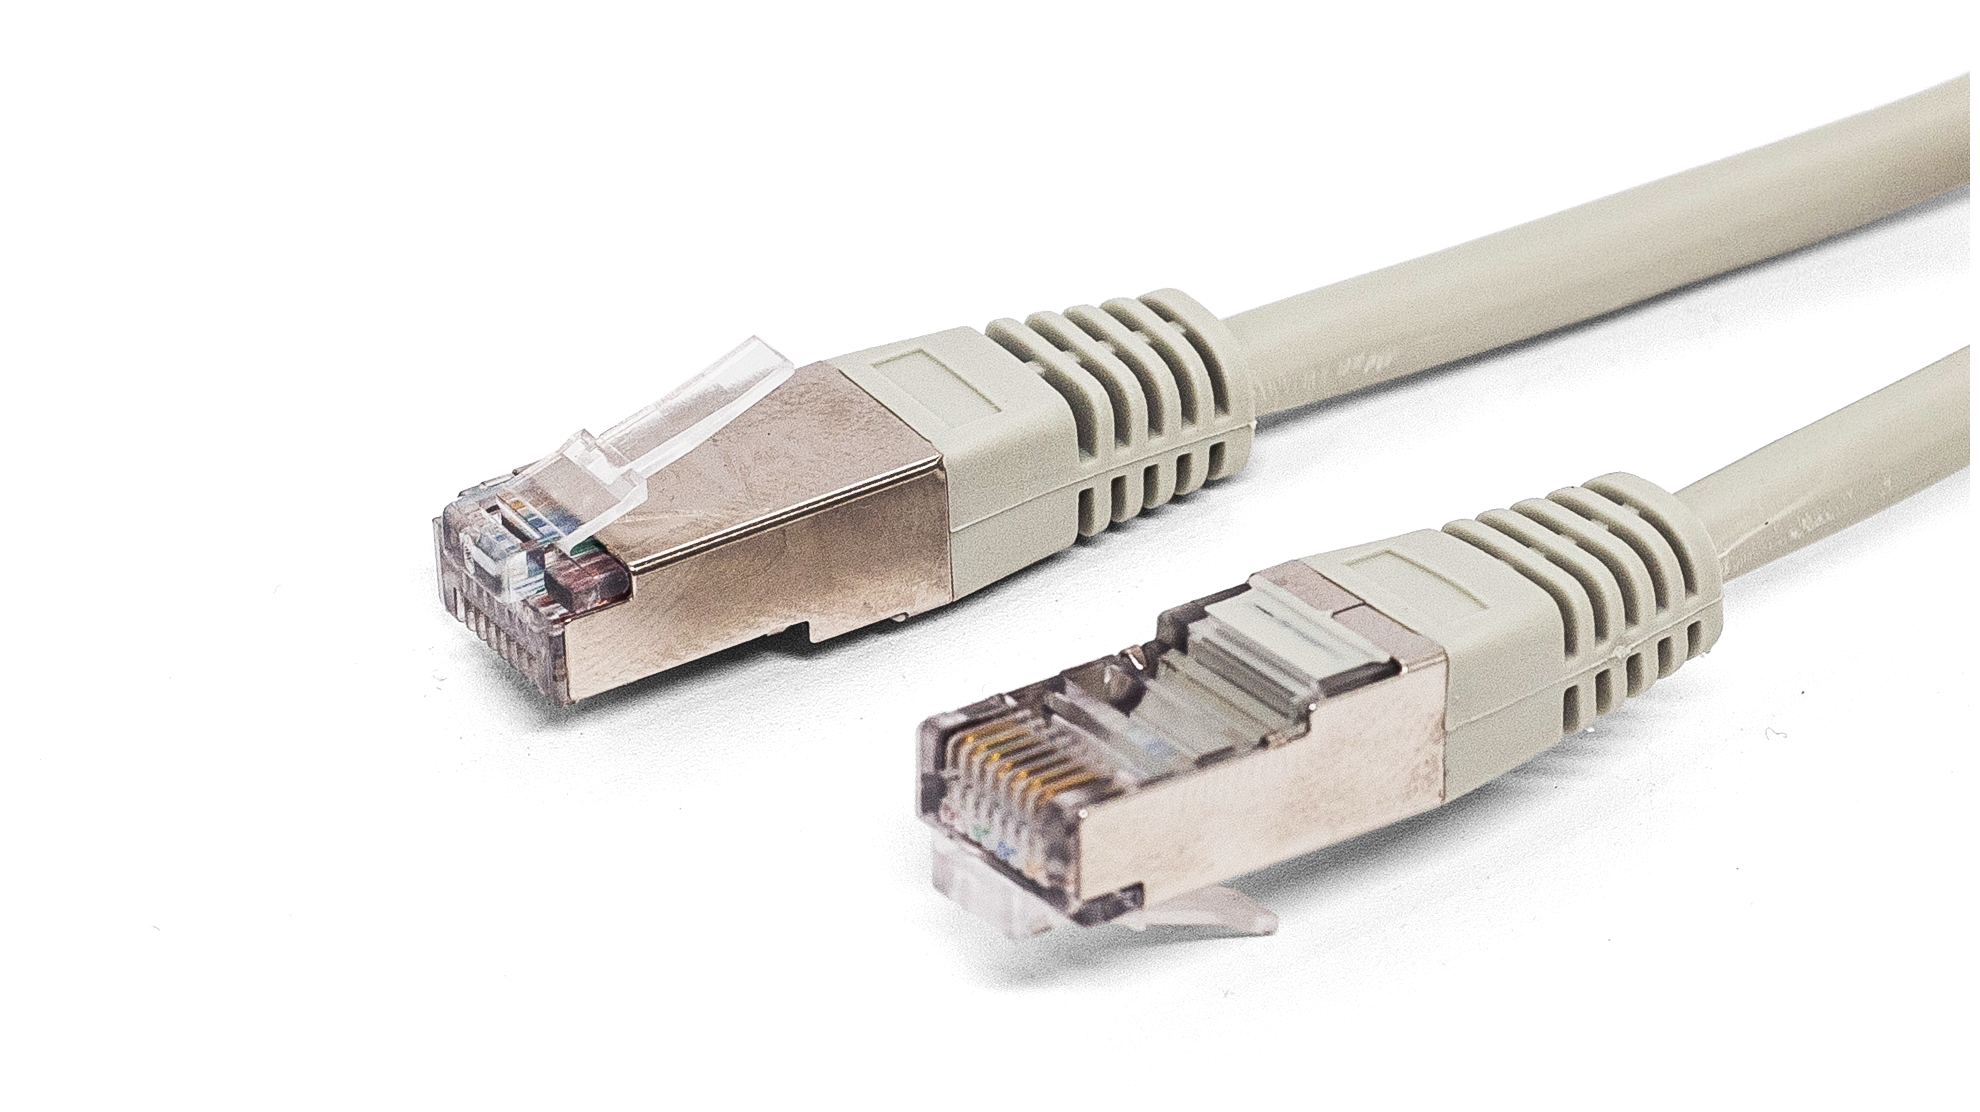 Патч-корд 5e кат. 5м Filum FL-F5-5M, кабель для интернета, 26AWG(7x0.16 мм), омедненный алюминий (CCA), серый